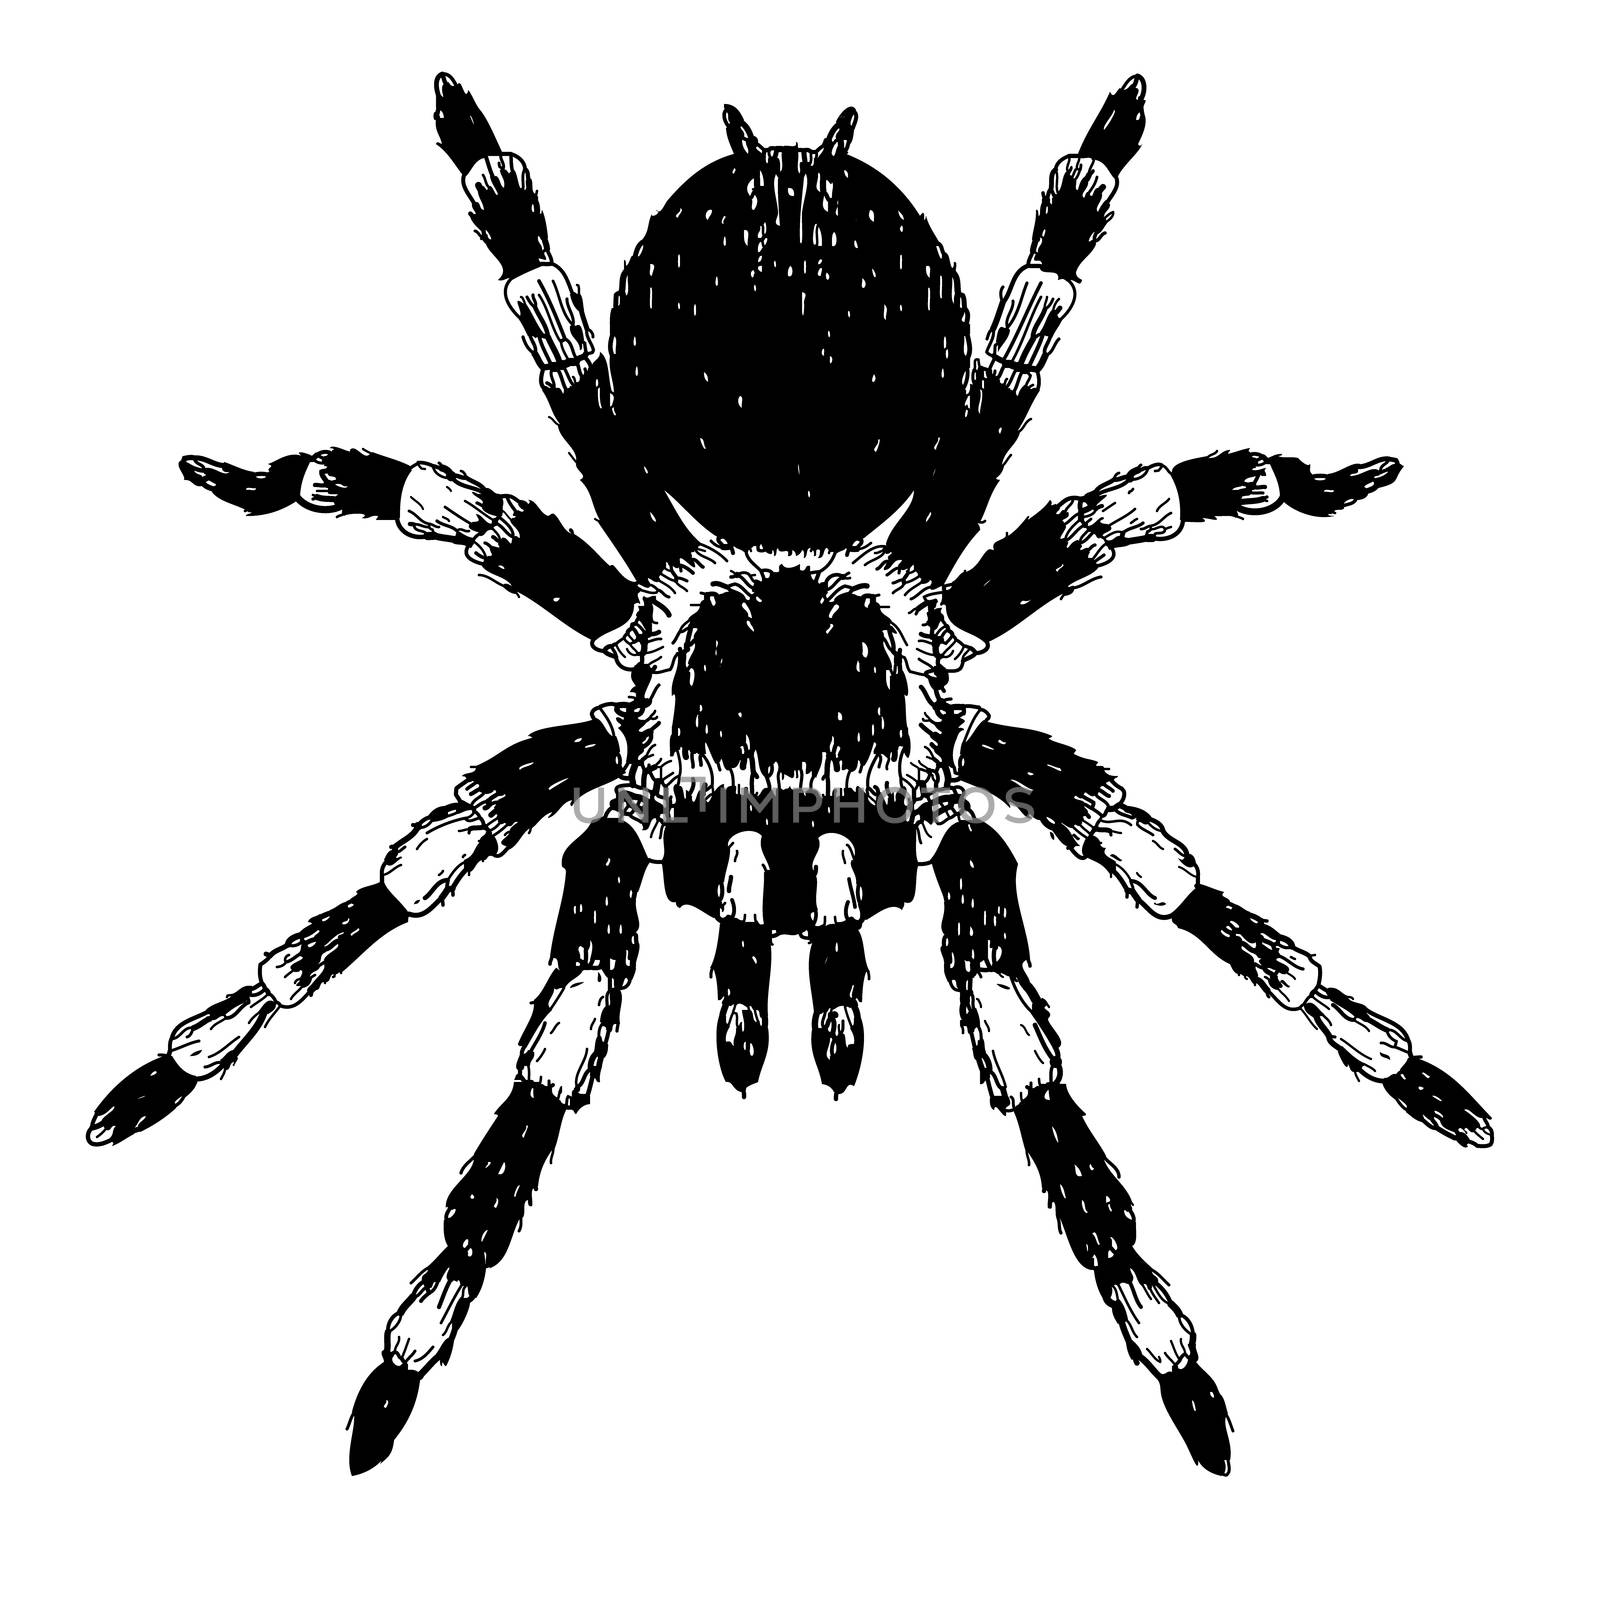 freehand sketch illustration of spider, doodle hand drawn